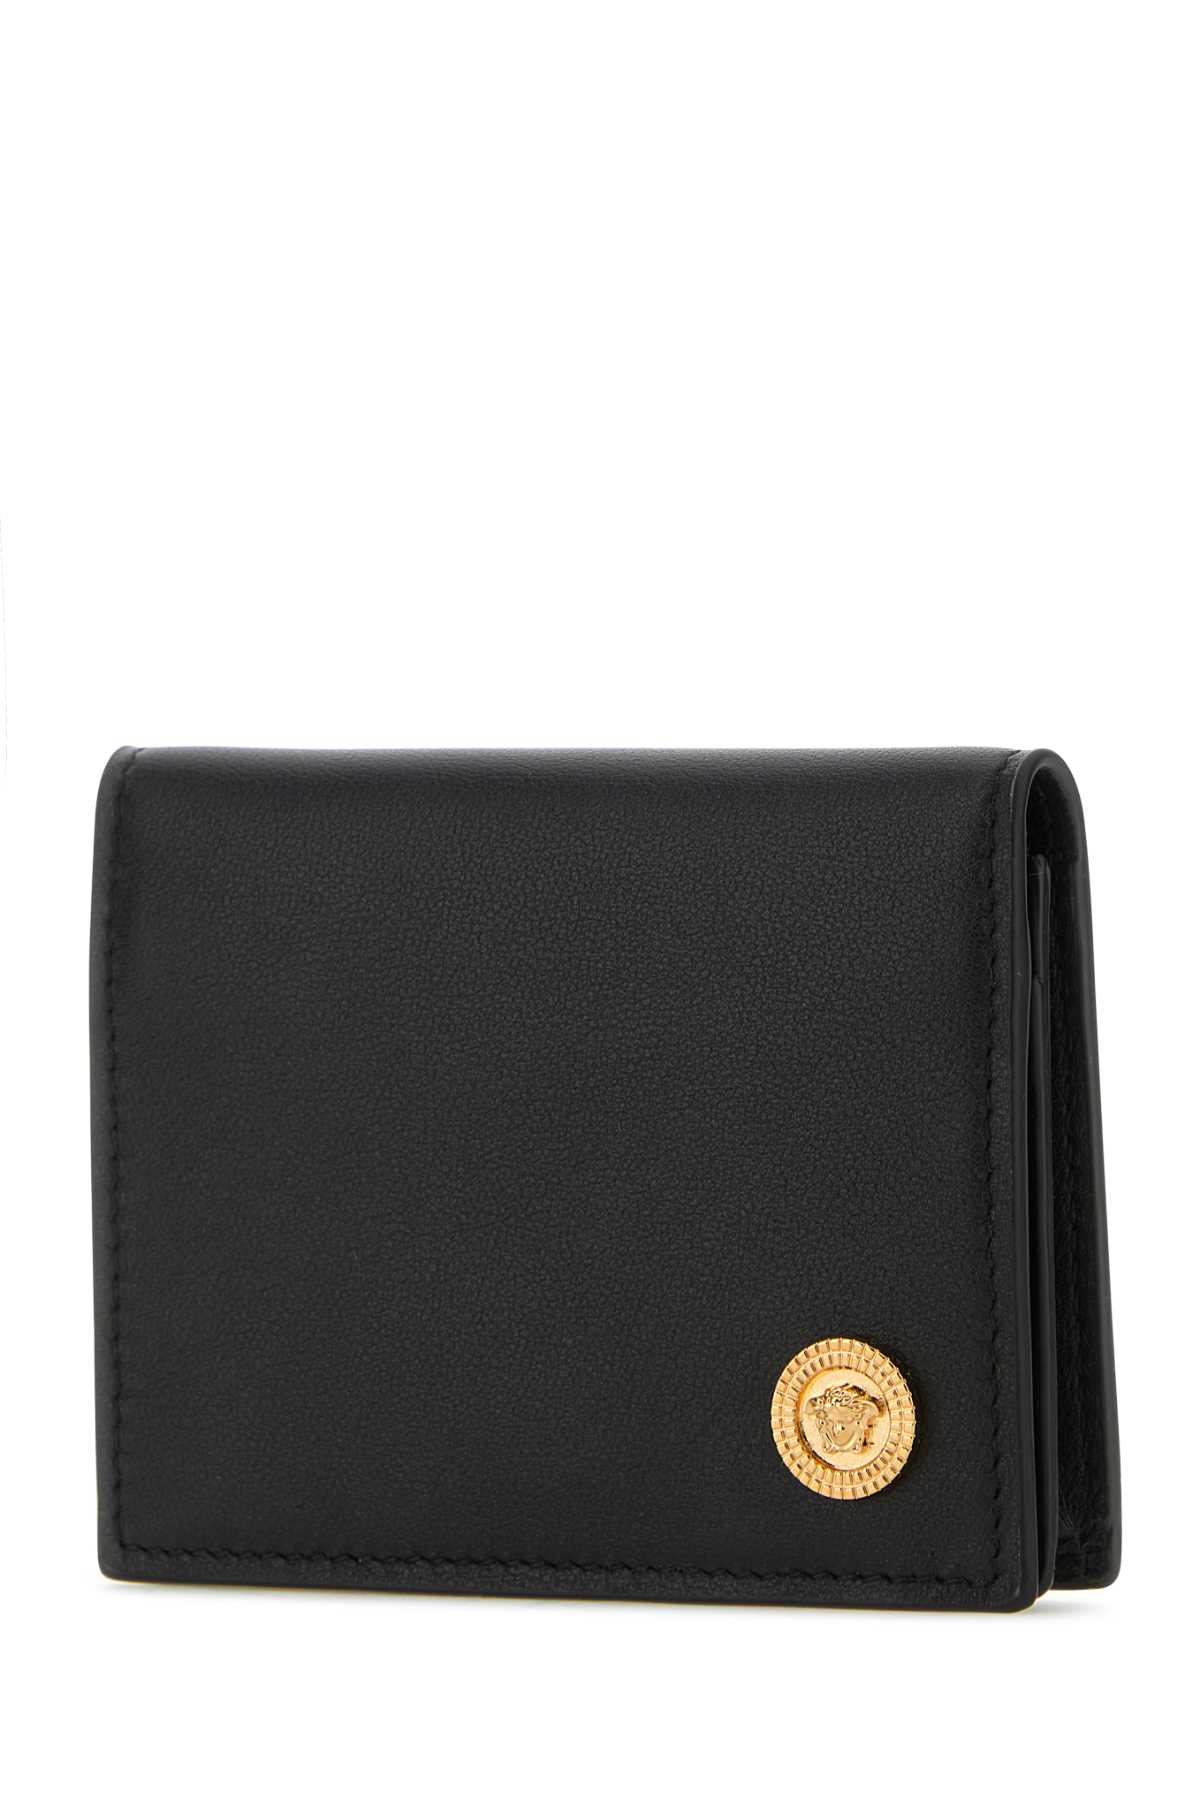 Versace Black Leather Medusa Biggie Wallet In 1b00v